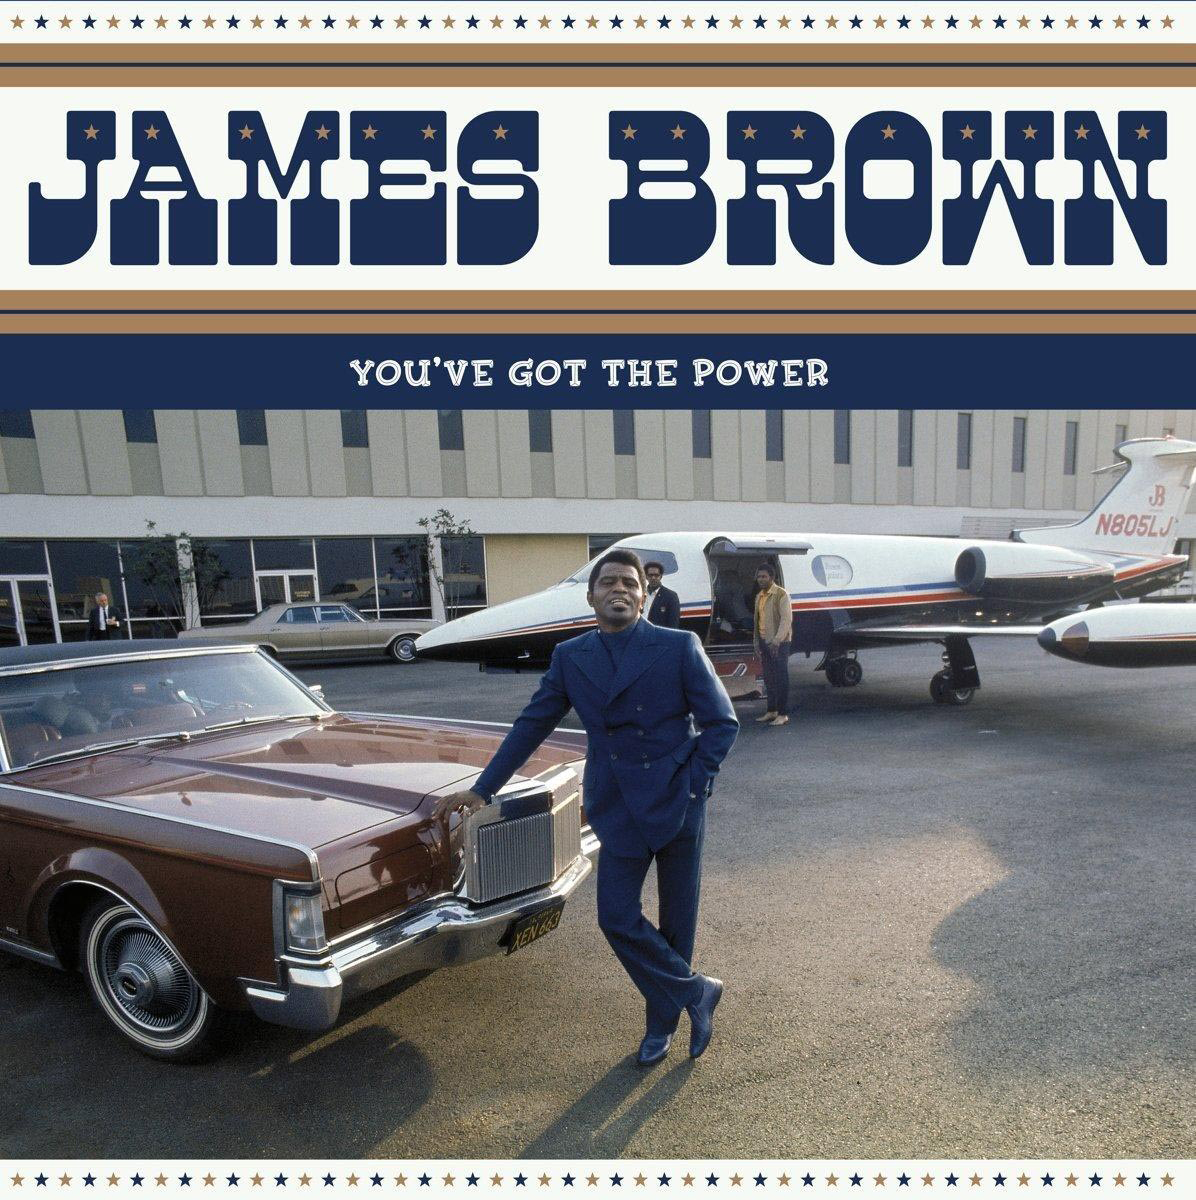 James Brown Cover LP) Got You\'ve (Vinyl) (Gatefold - Vinyl Power The 